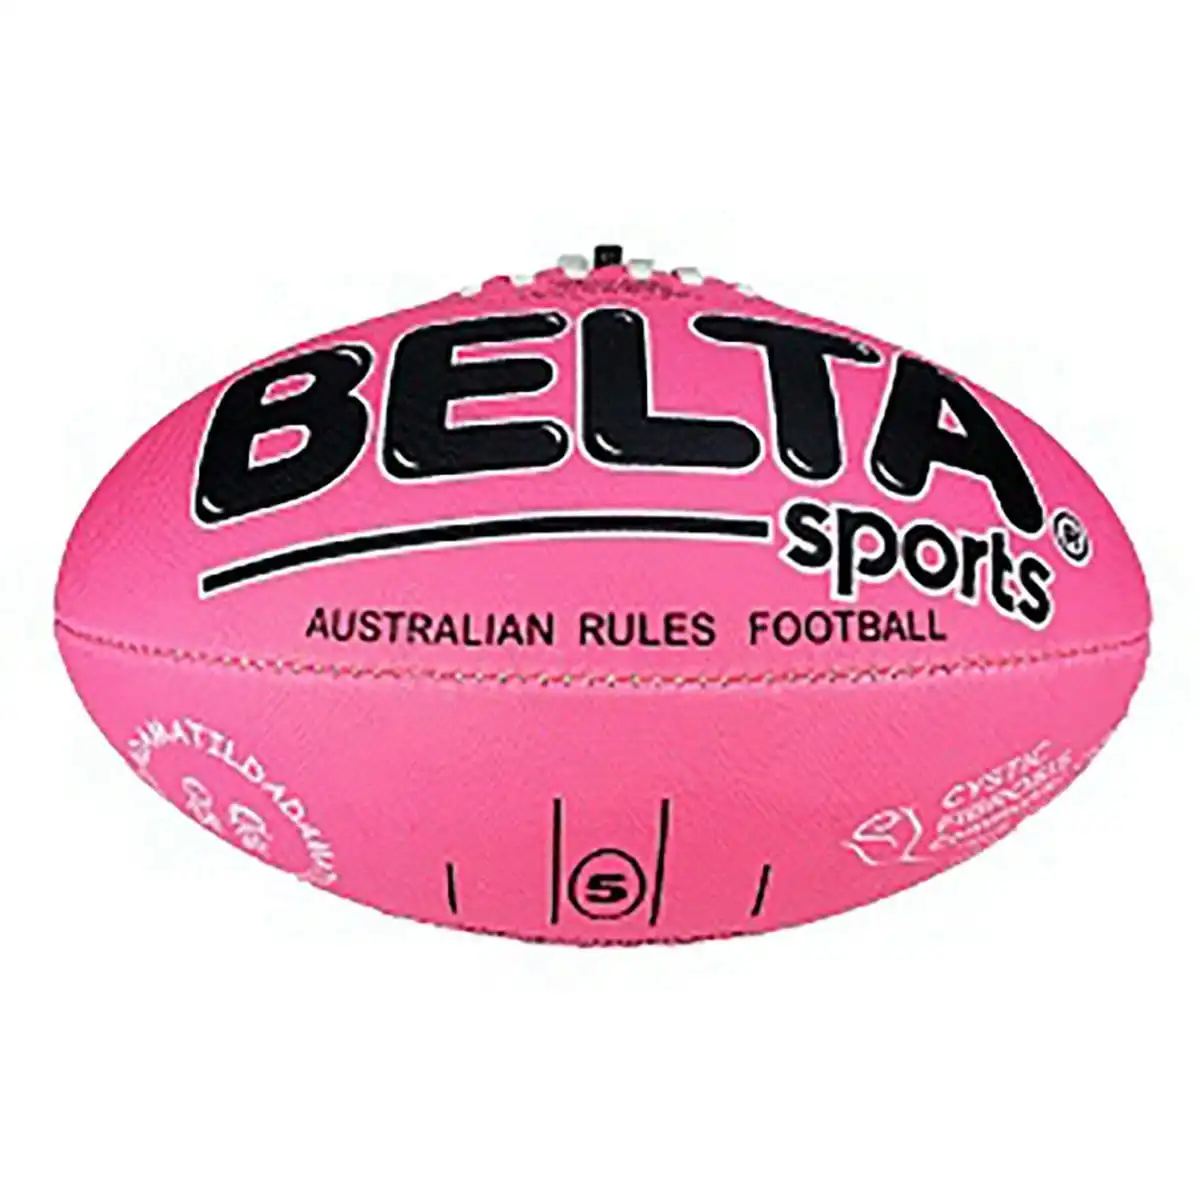 Belta Sports Size 5 Football - Pink